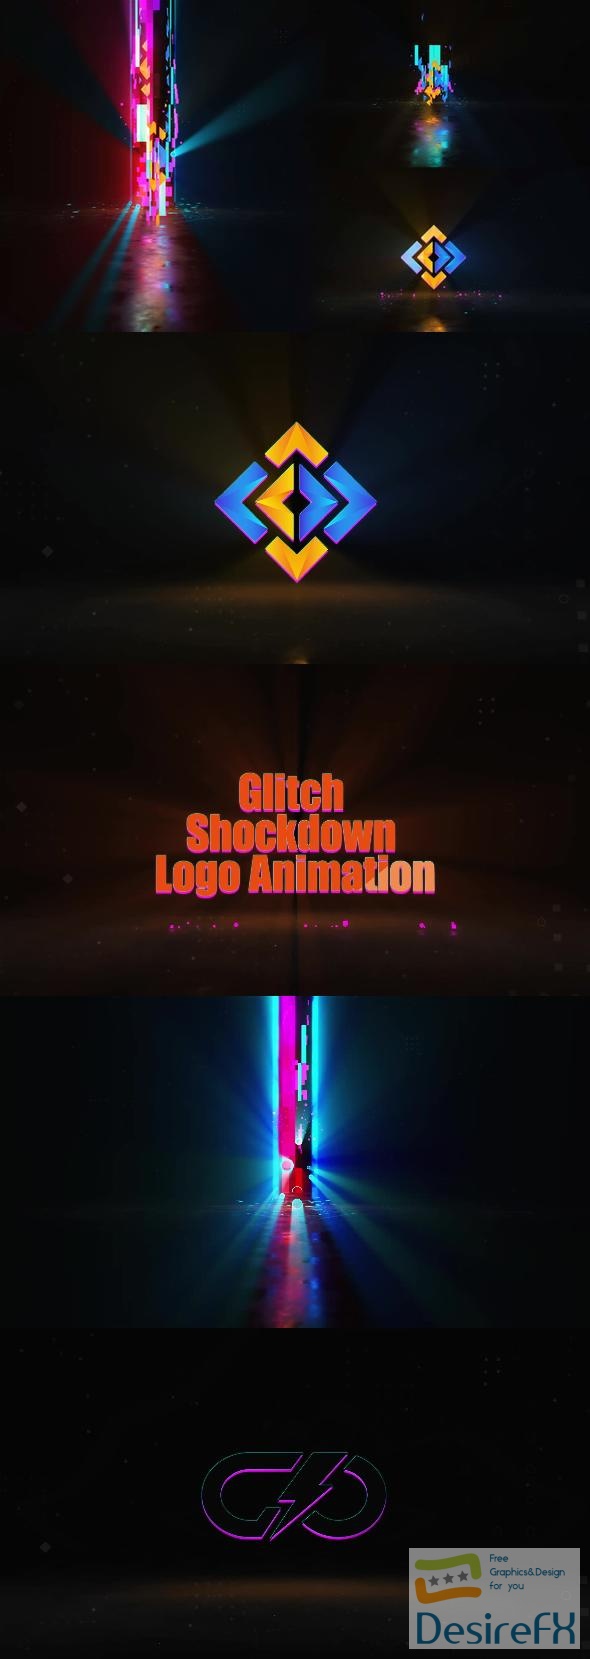 VideoHive Glitch Shockdown Logo Animation 47148603